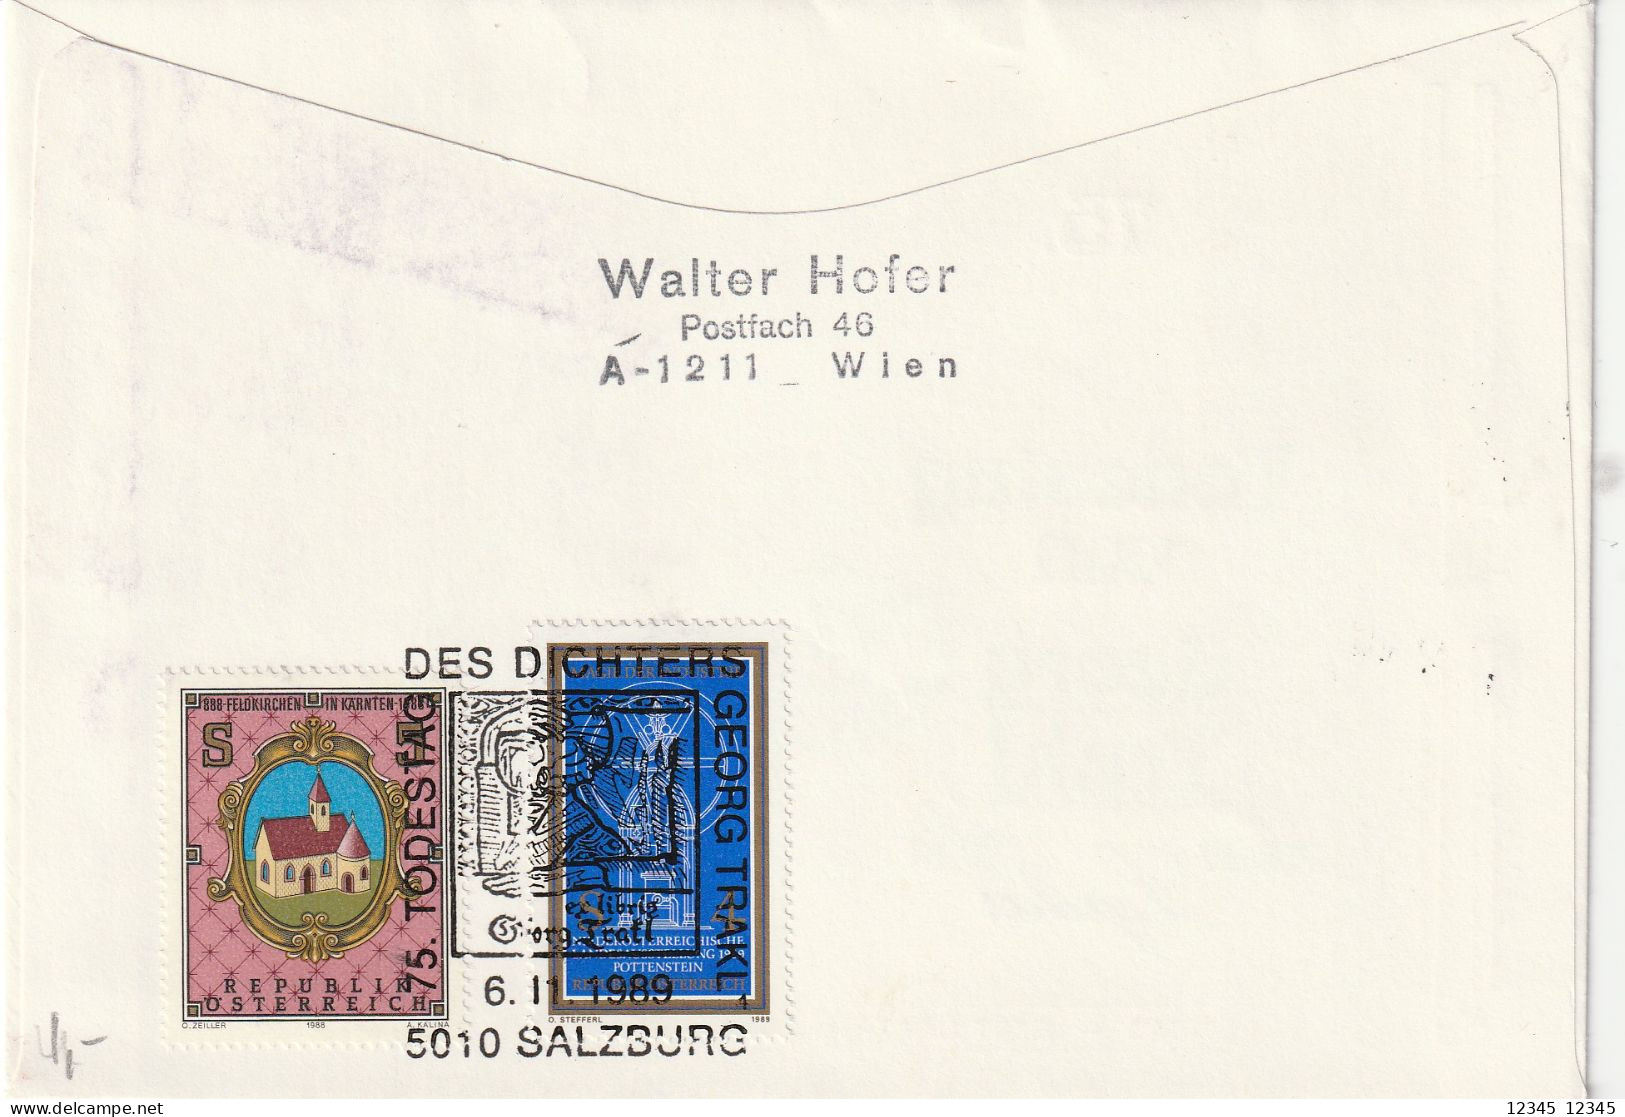 Oostenrijk 1989, Registered FDC Sent To Hamburg, Germany, Georg Trakl, Poet - FDC